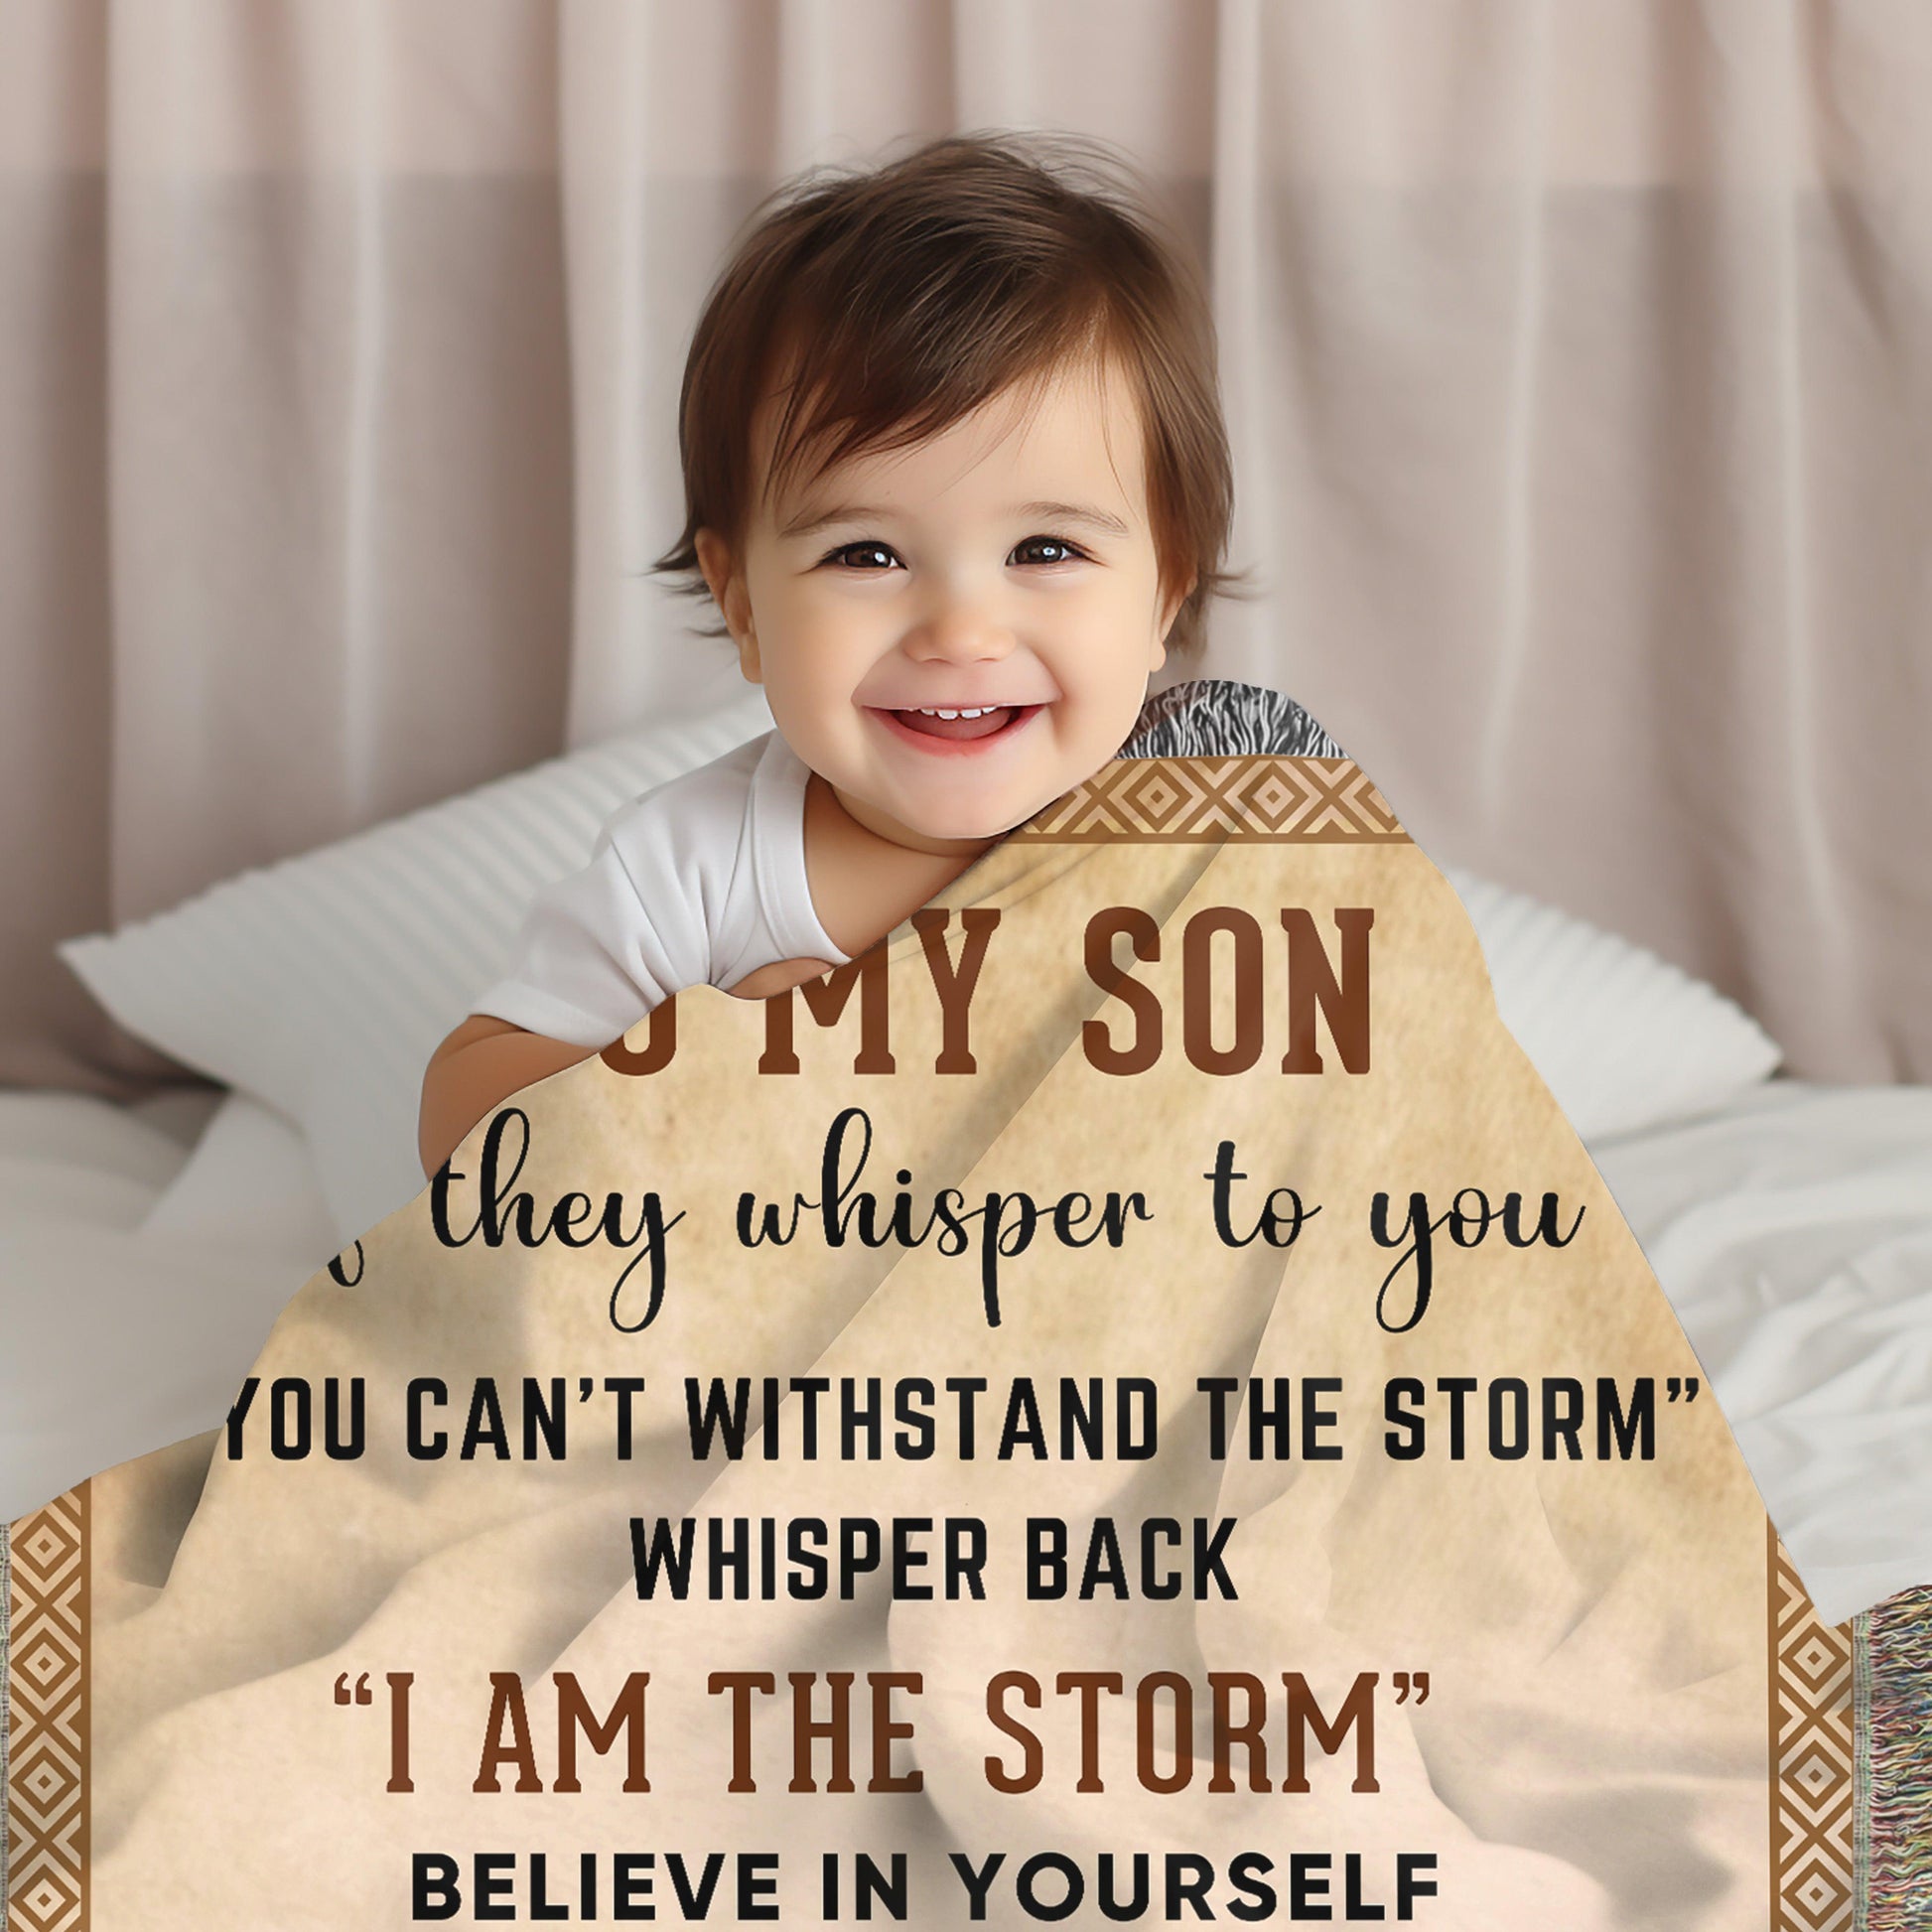 To My Son, Whisper Back, I am the Storm Heirloom Keepsake Woven Blanket - Mallard Moon Gift Shop